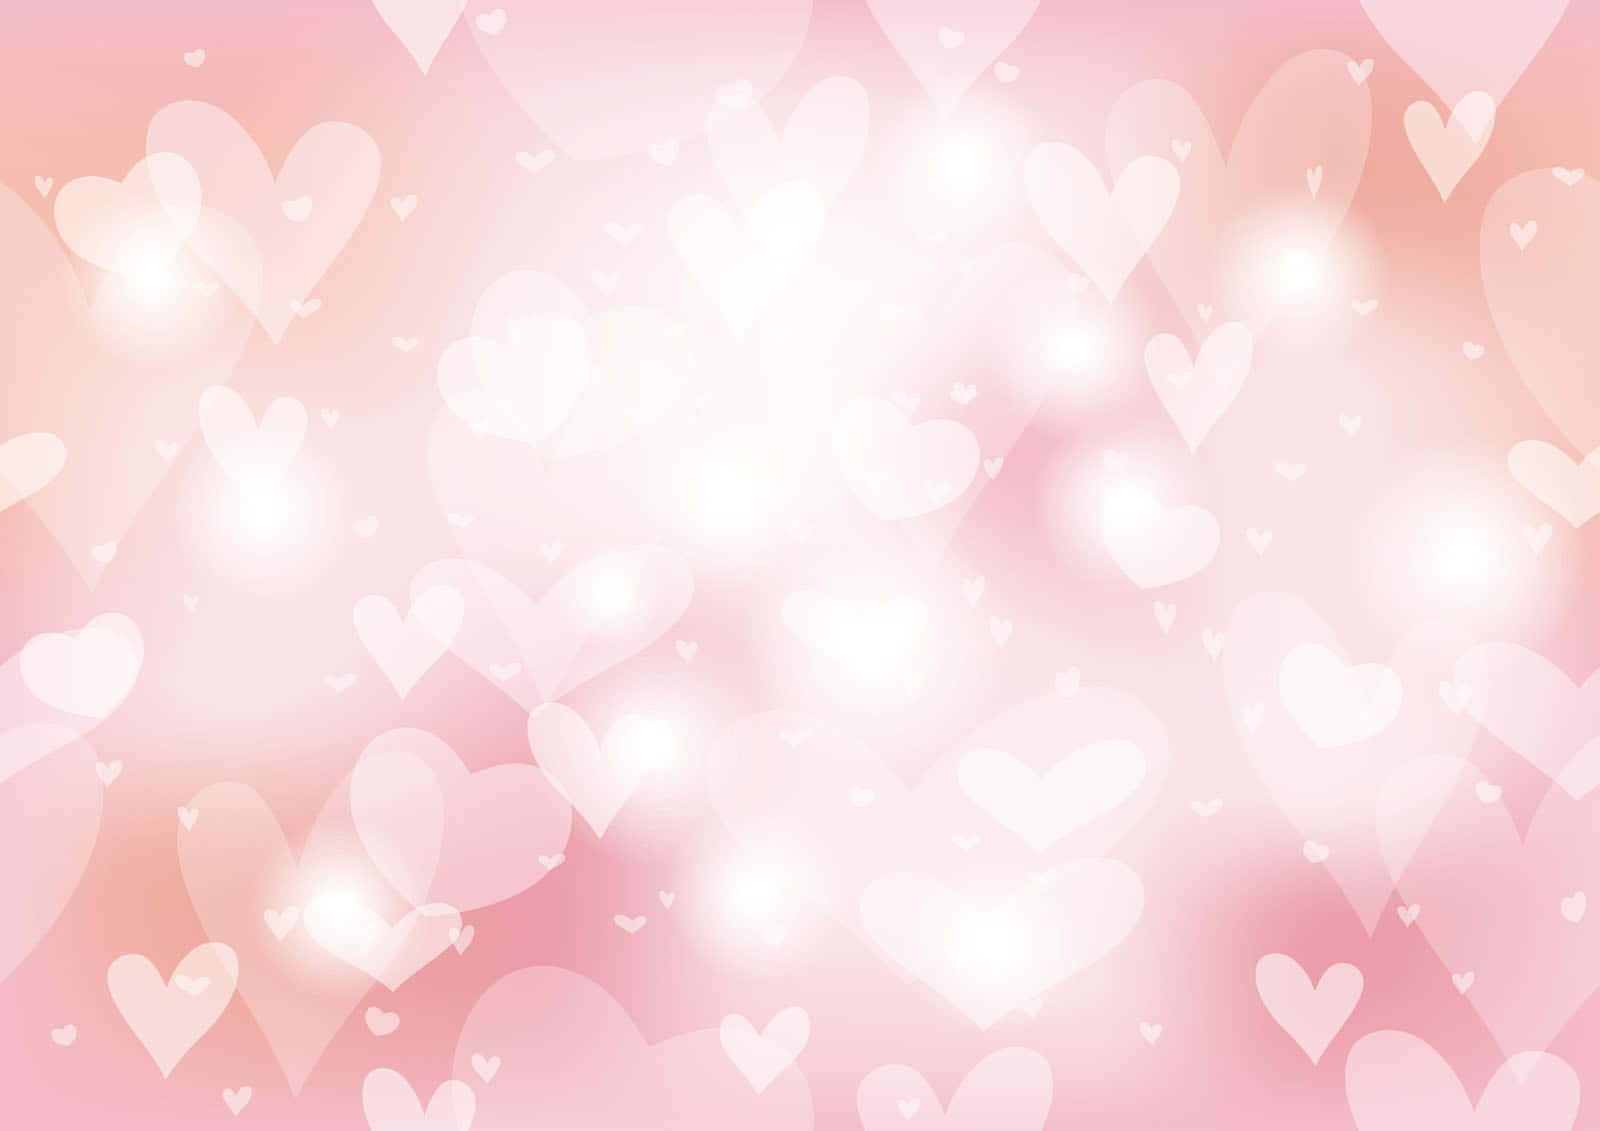 Pink Heart Shapes Romantic Background Illustration